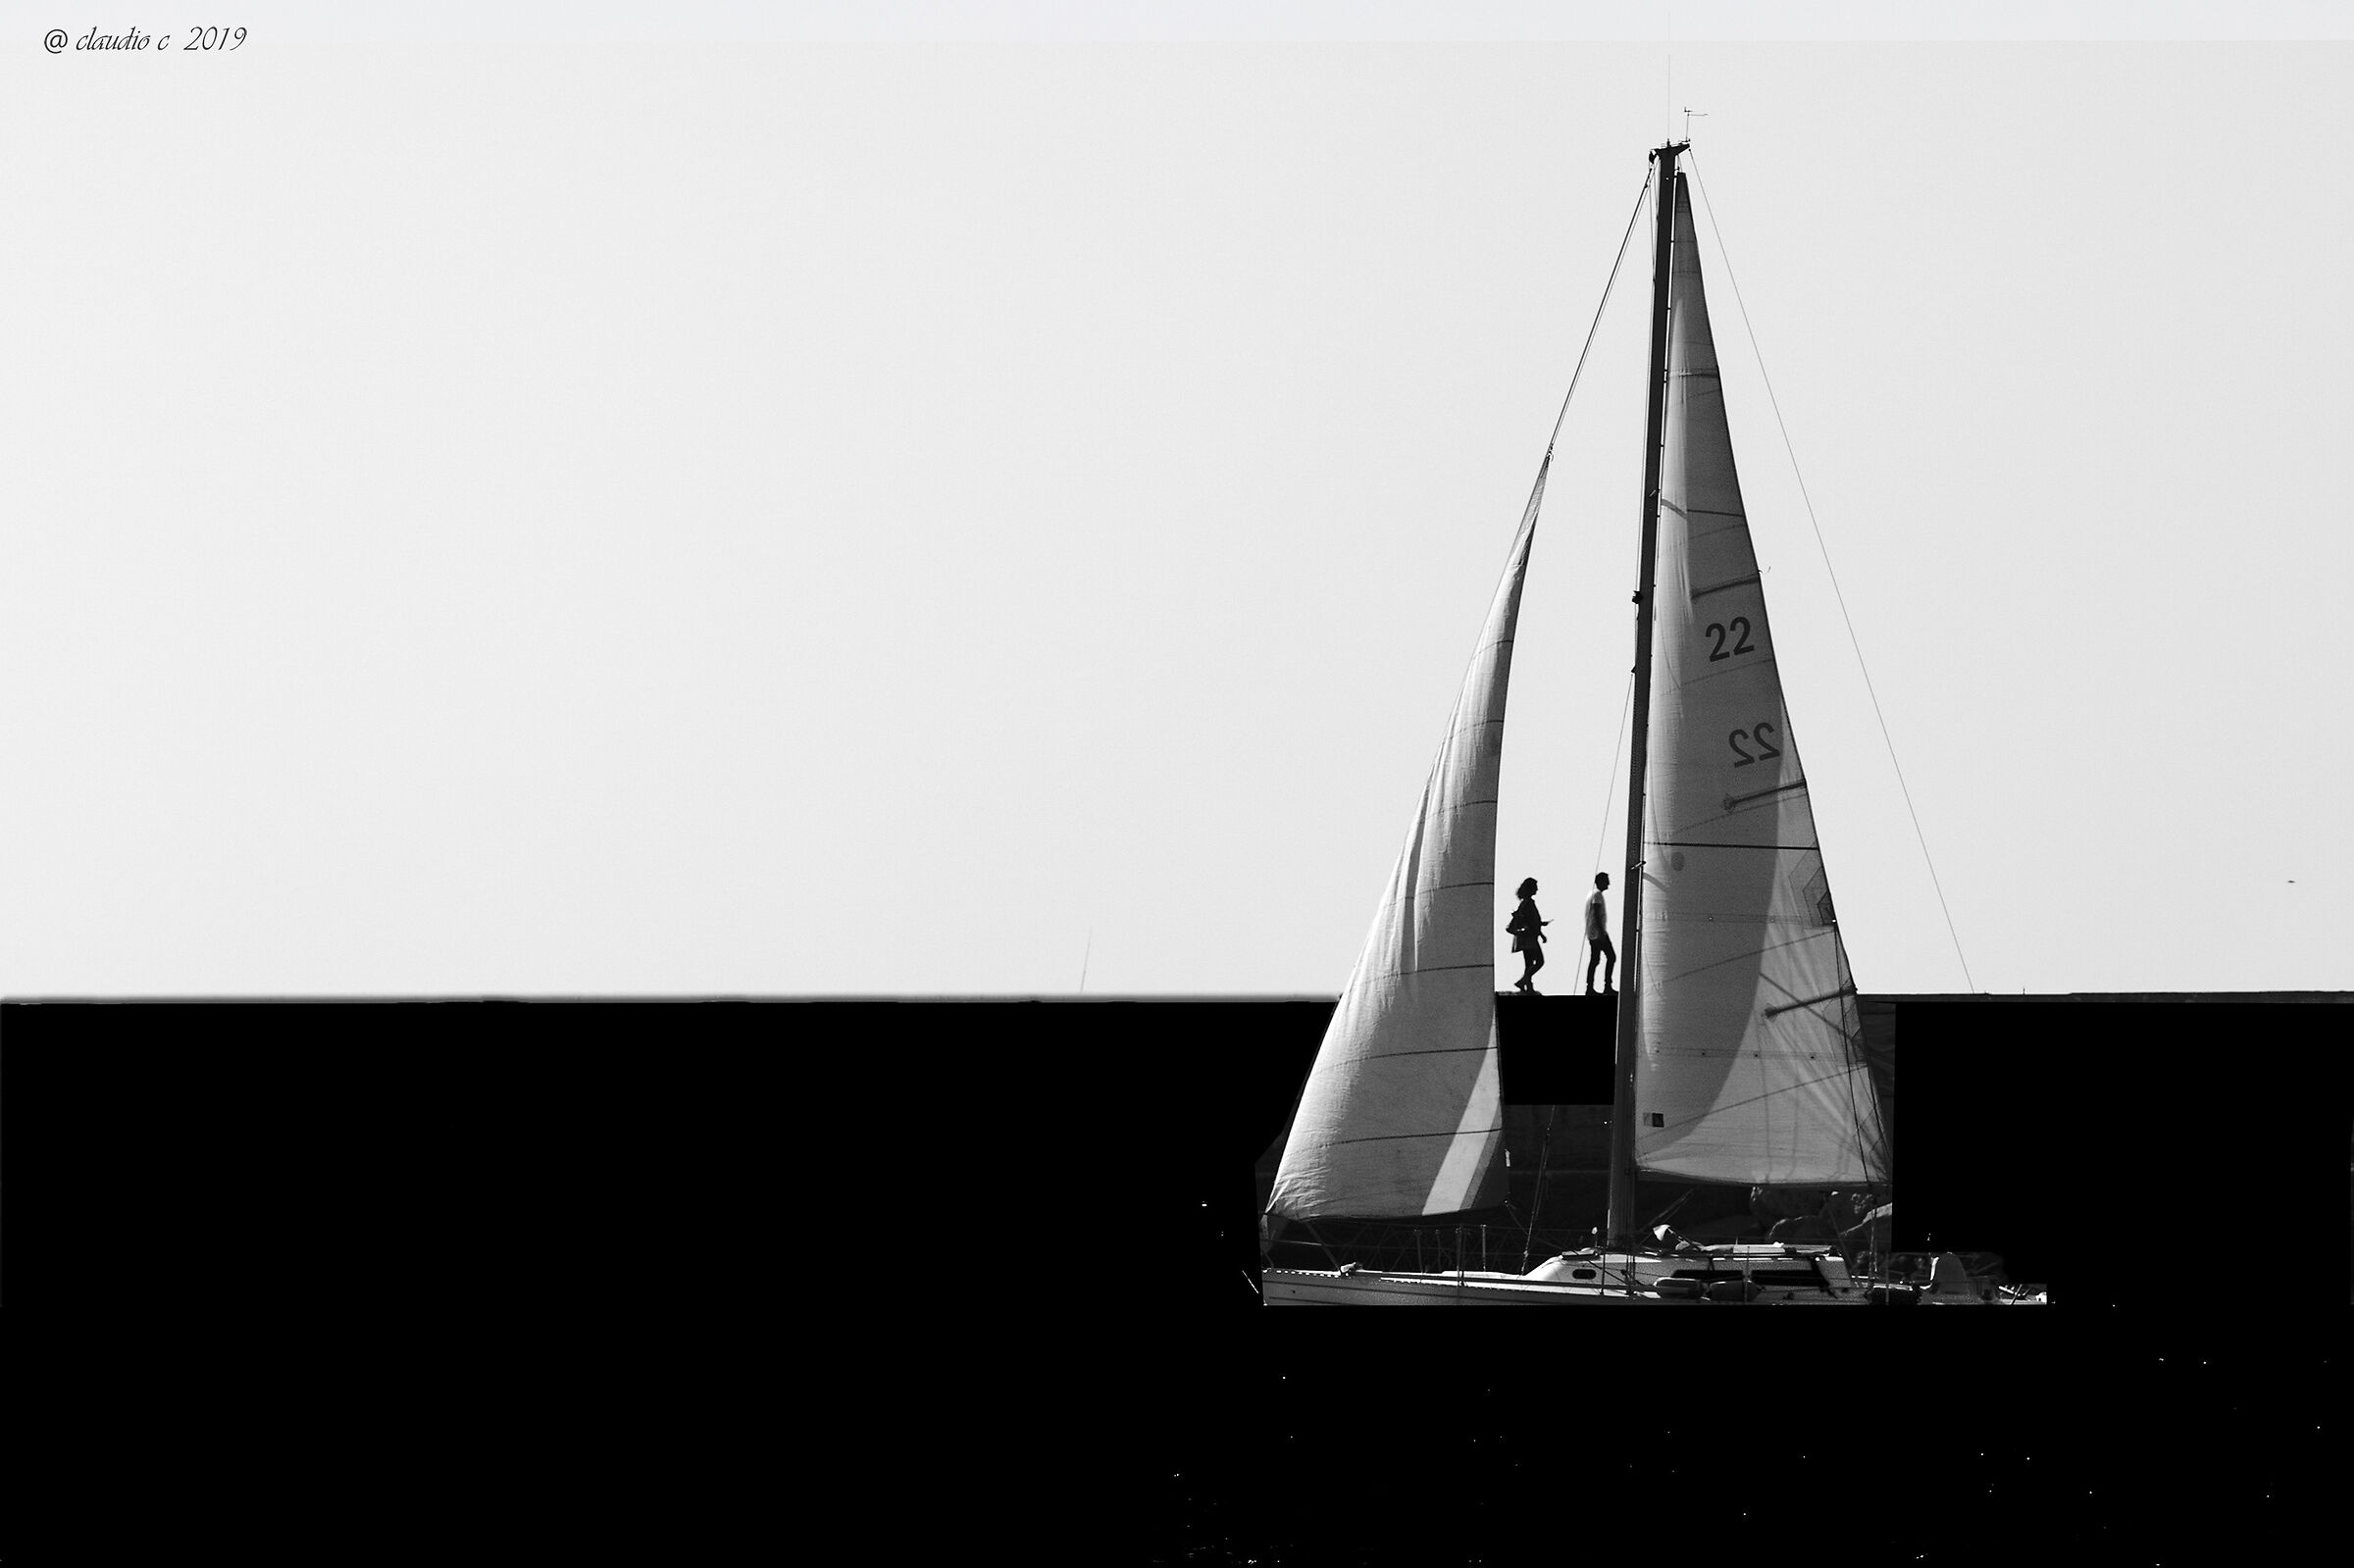 Between the sails...